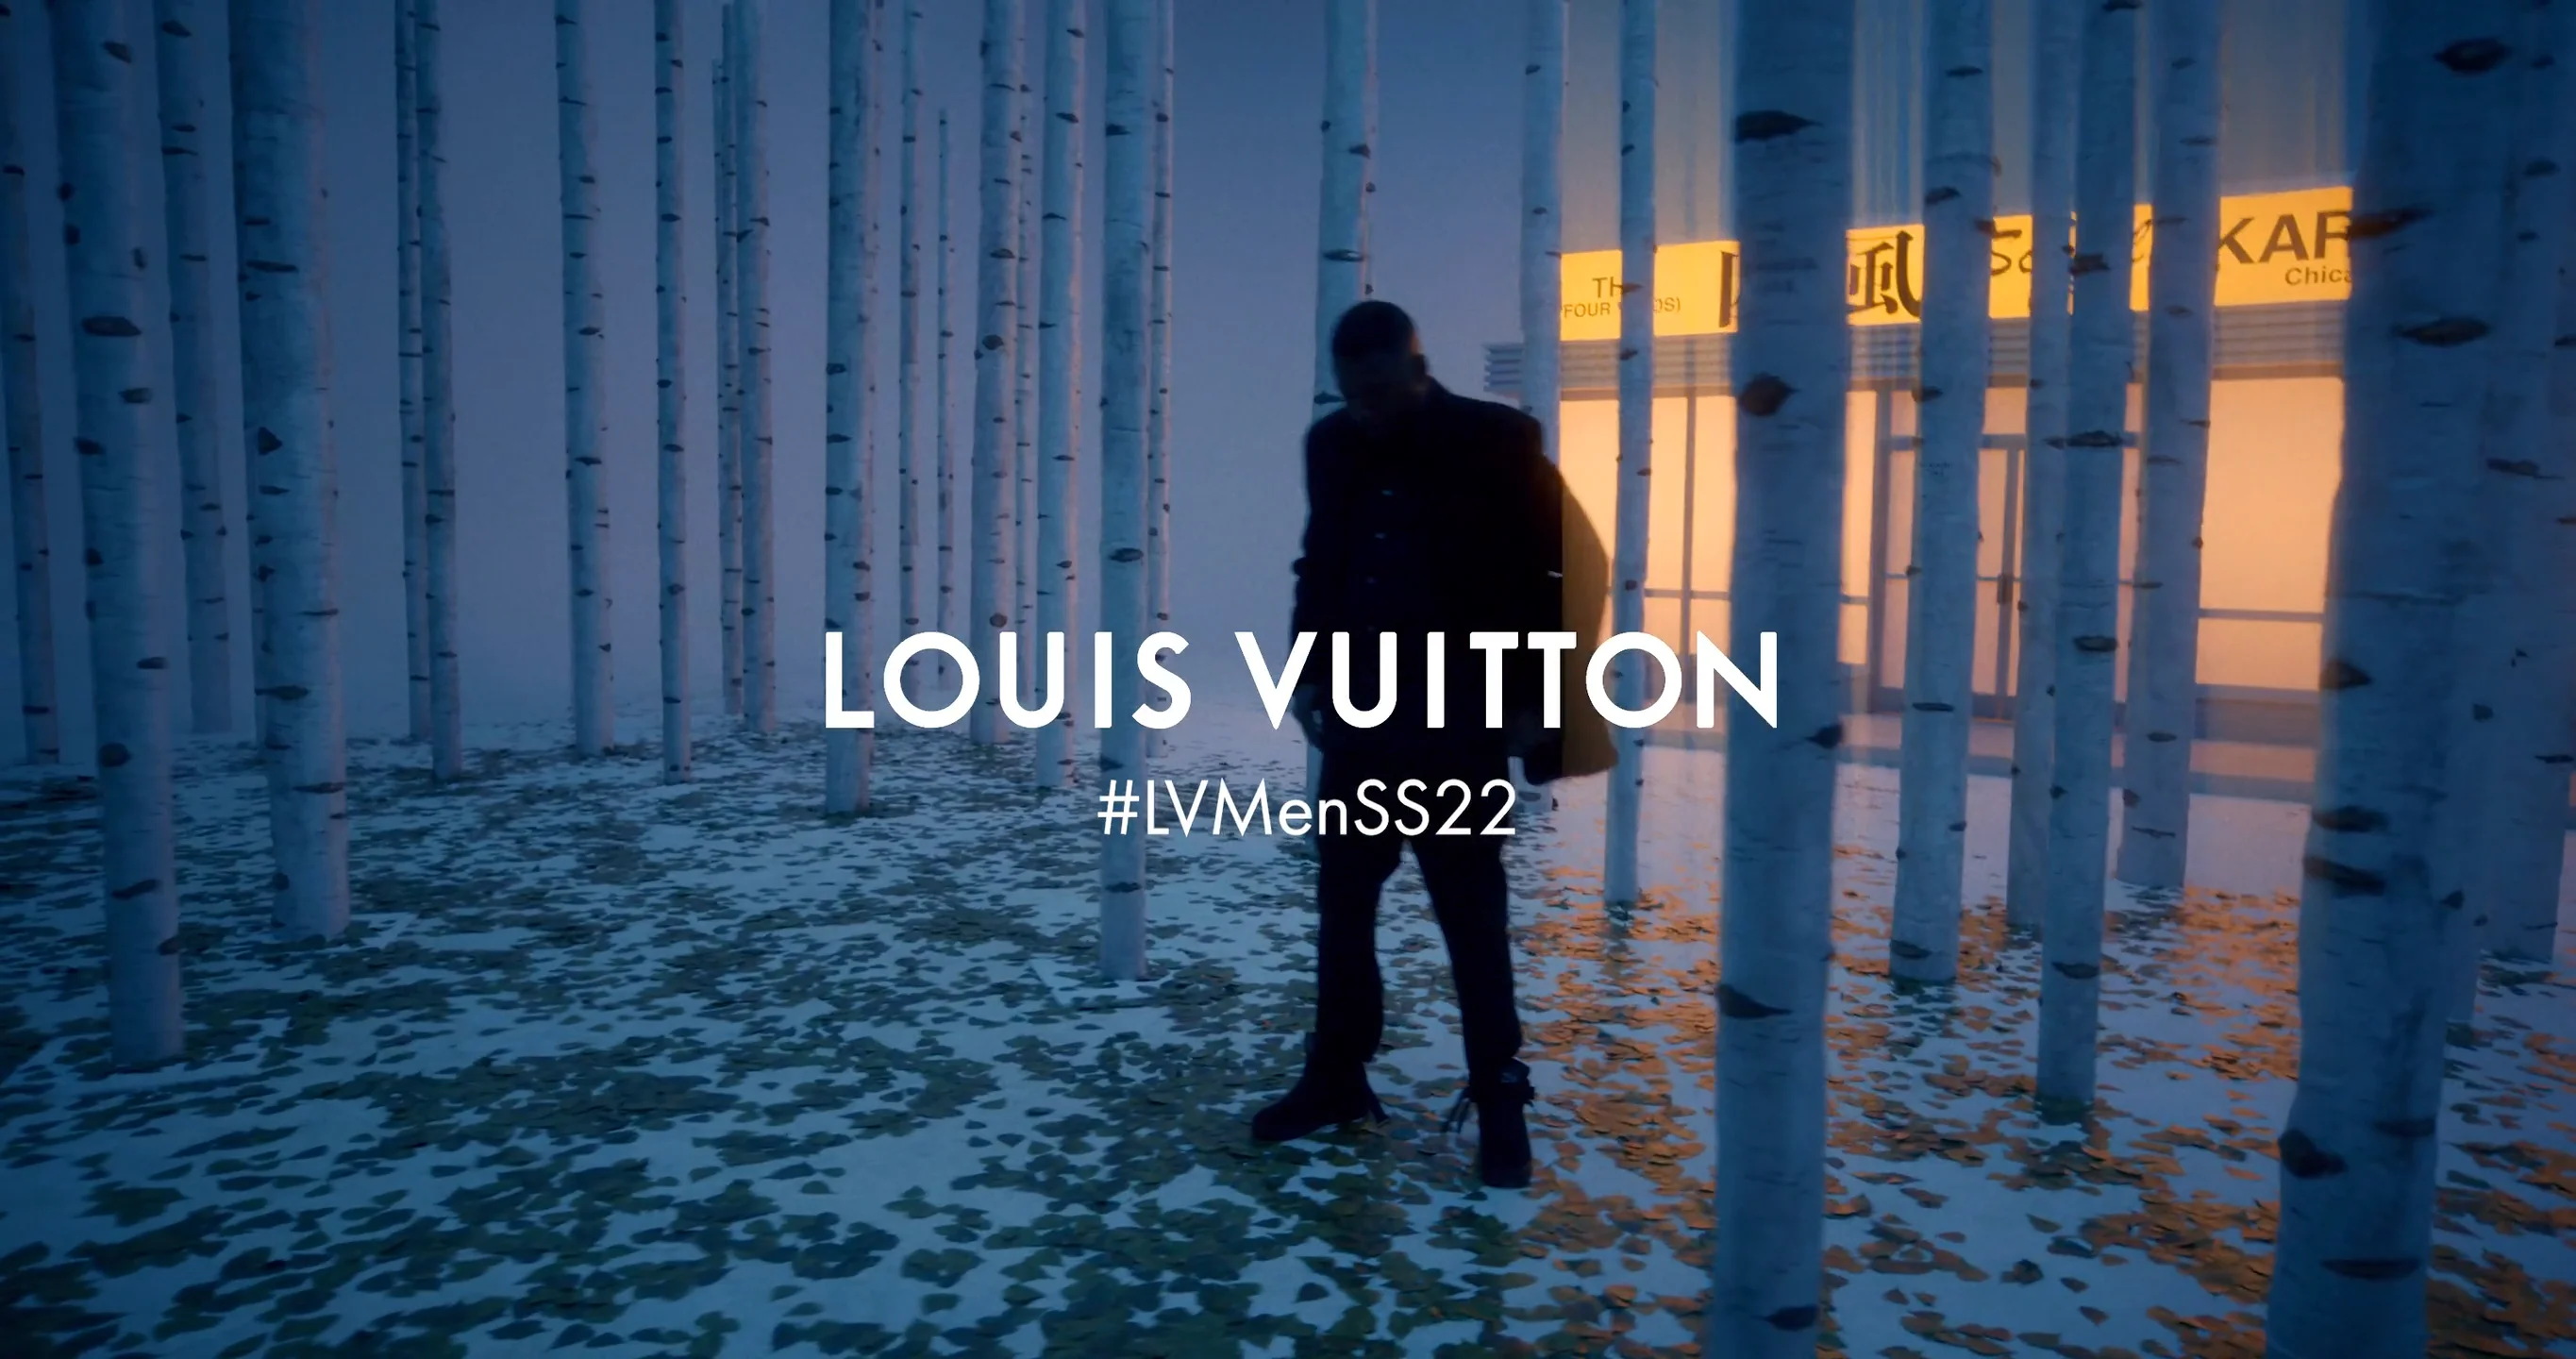 GZA Releases 'Liquid Swords (Amen Break Version)' With Louis Vuitton